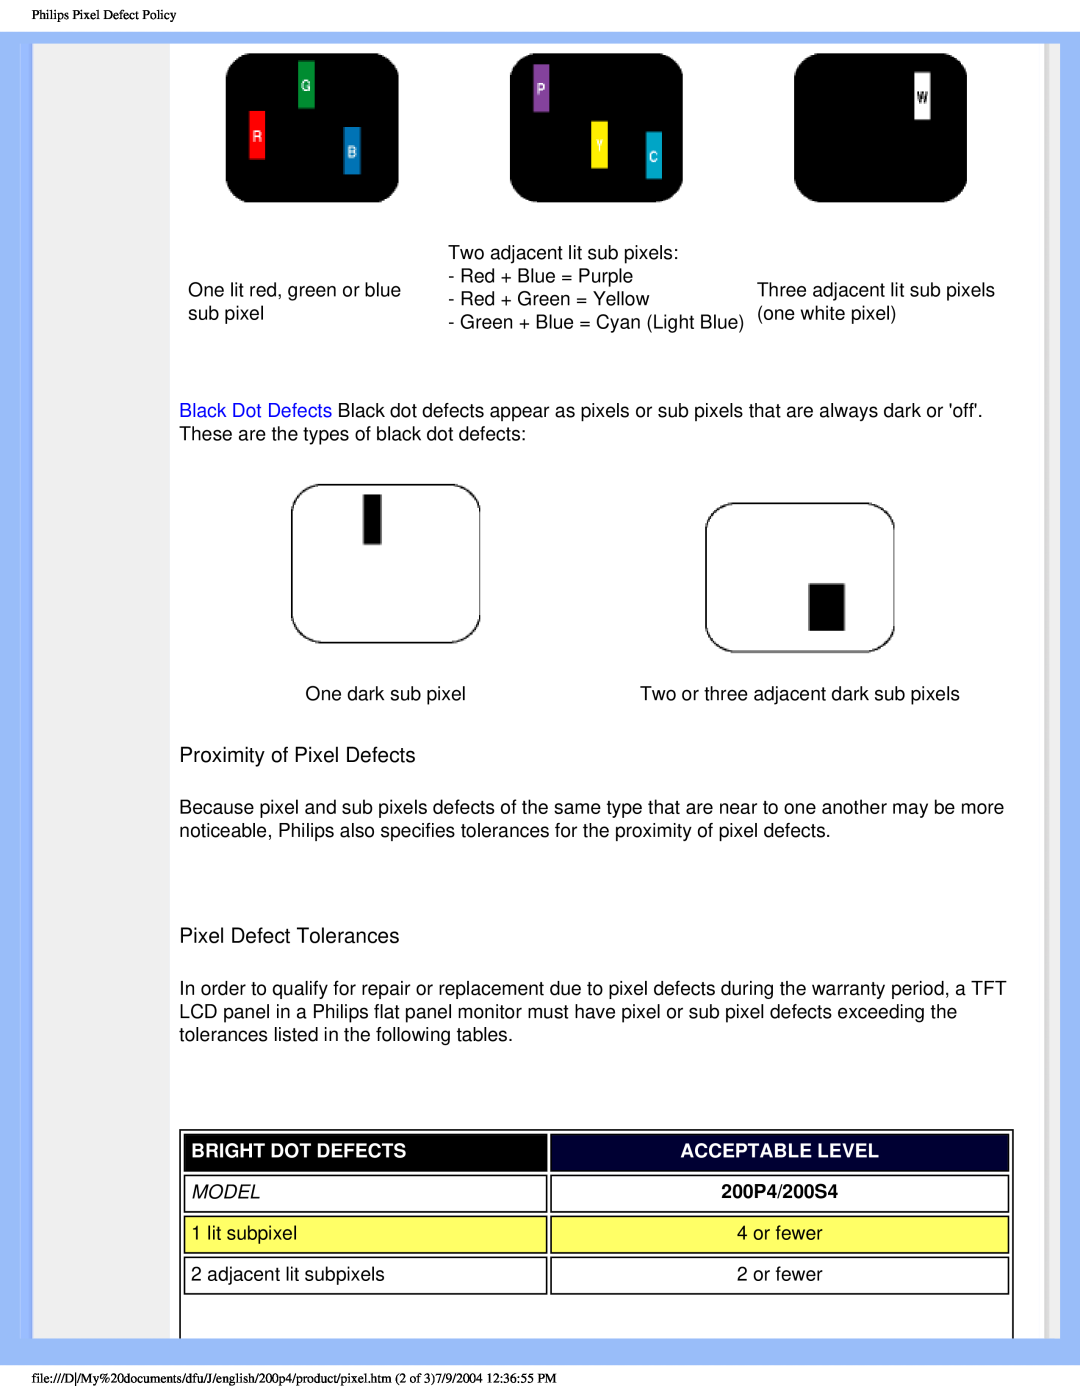 Philips user manual Bright Dot Defects, Acceptable Level, Model, 200P4/200S4, adjacent lit subpixels 